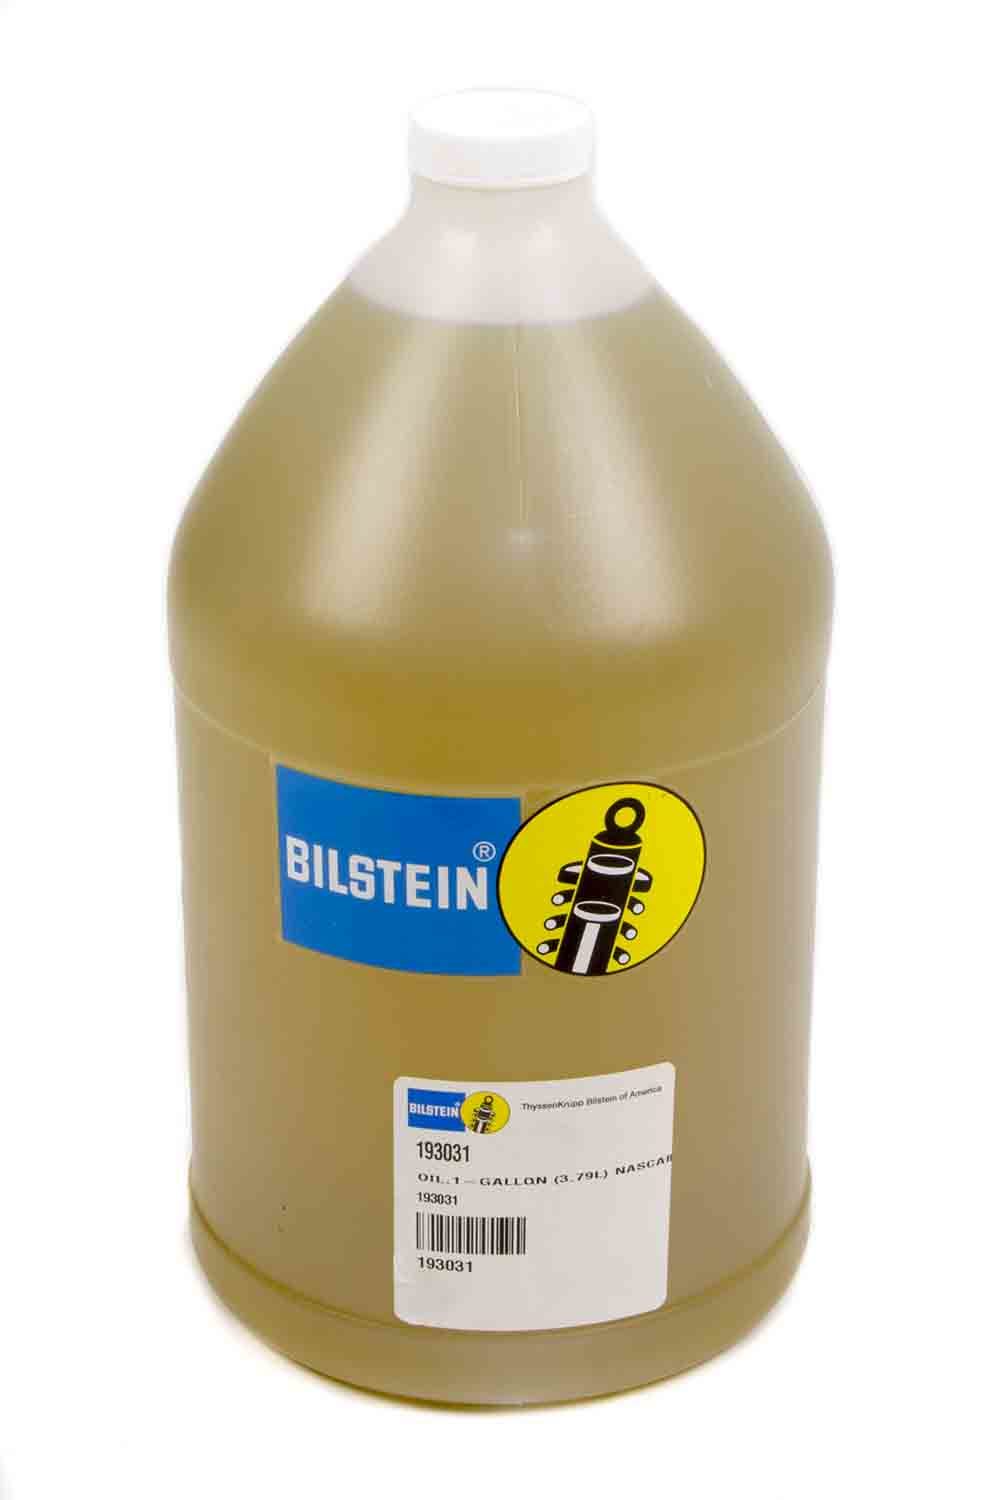 Bilstein 193031 Shock Oil, 1 gal Jug, Each